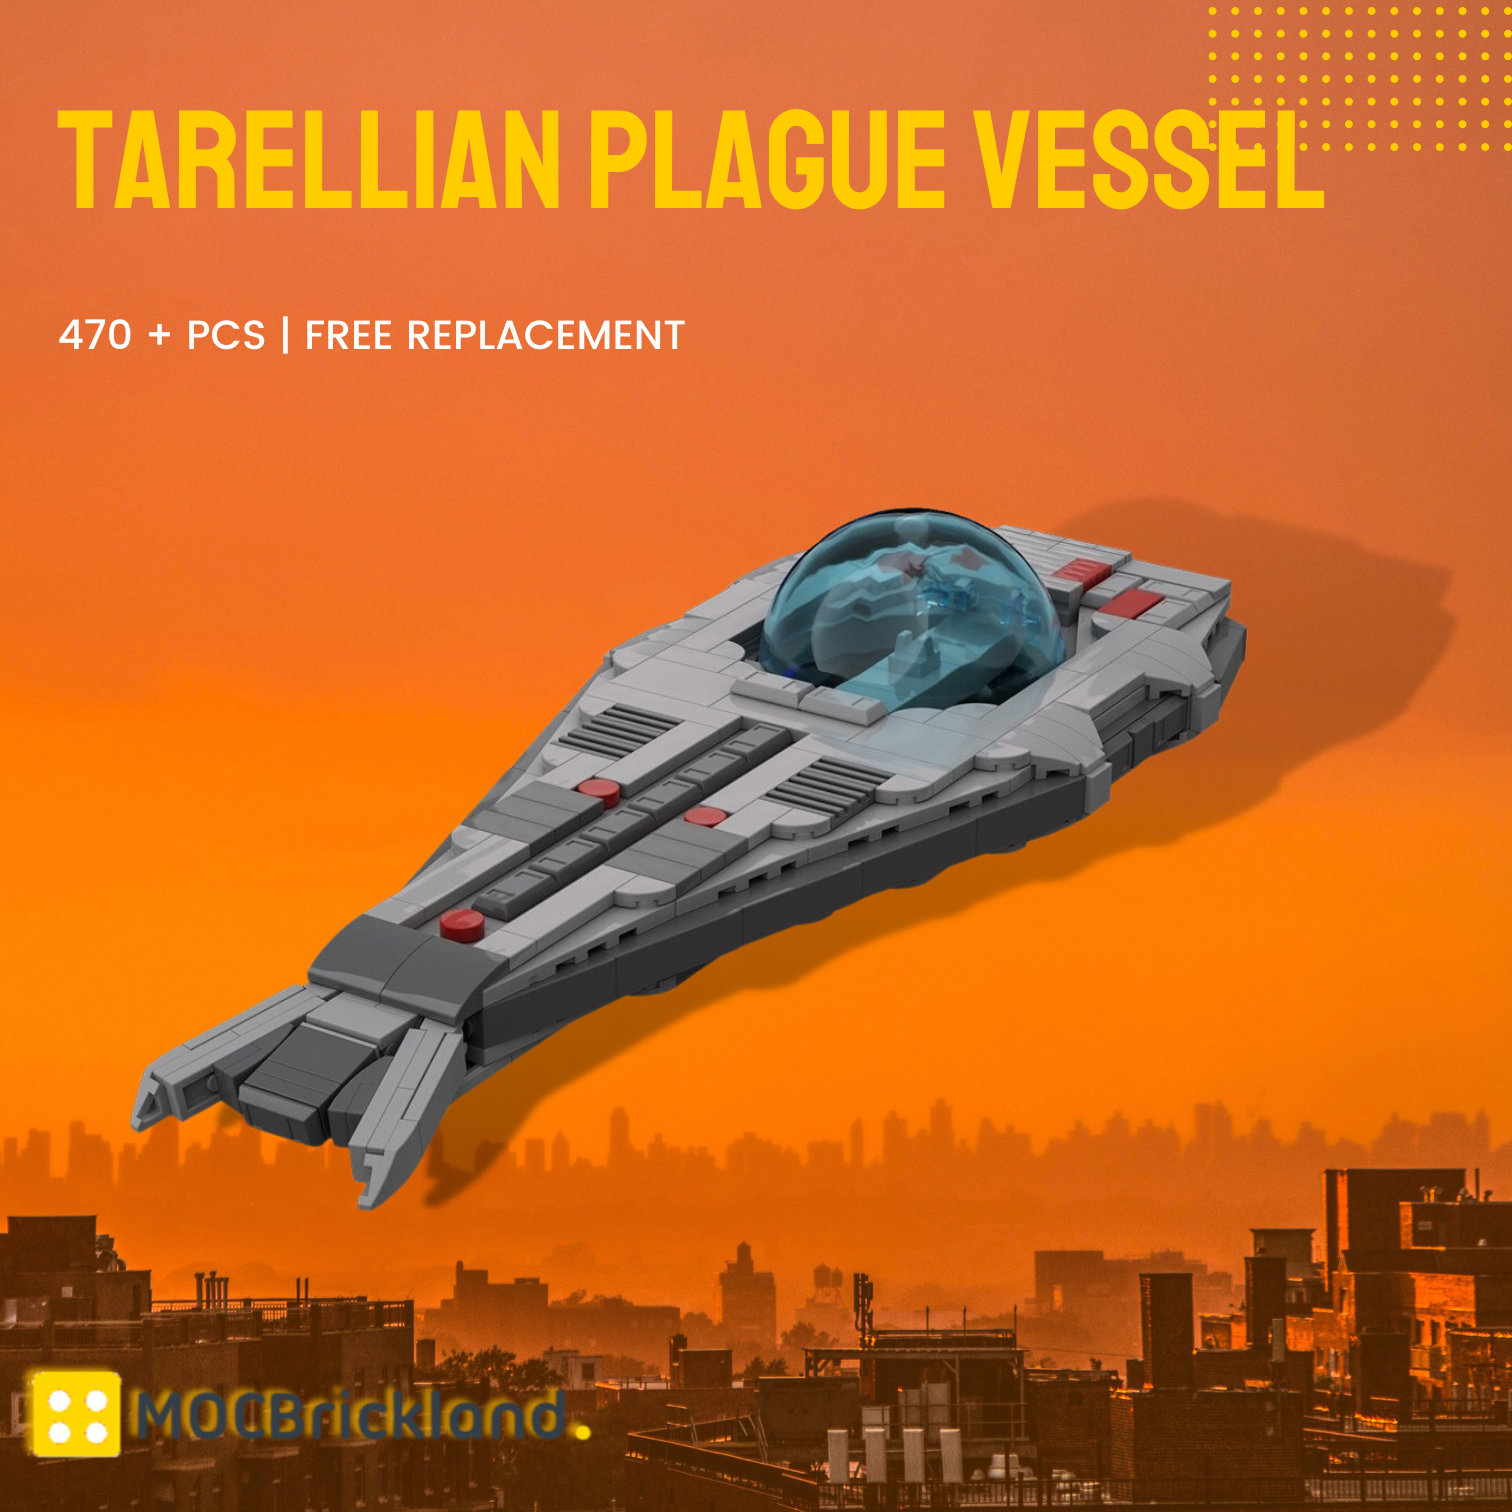 Tarellian Plague Vessel MOC-119084 Space With 470 Pieces